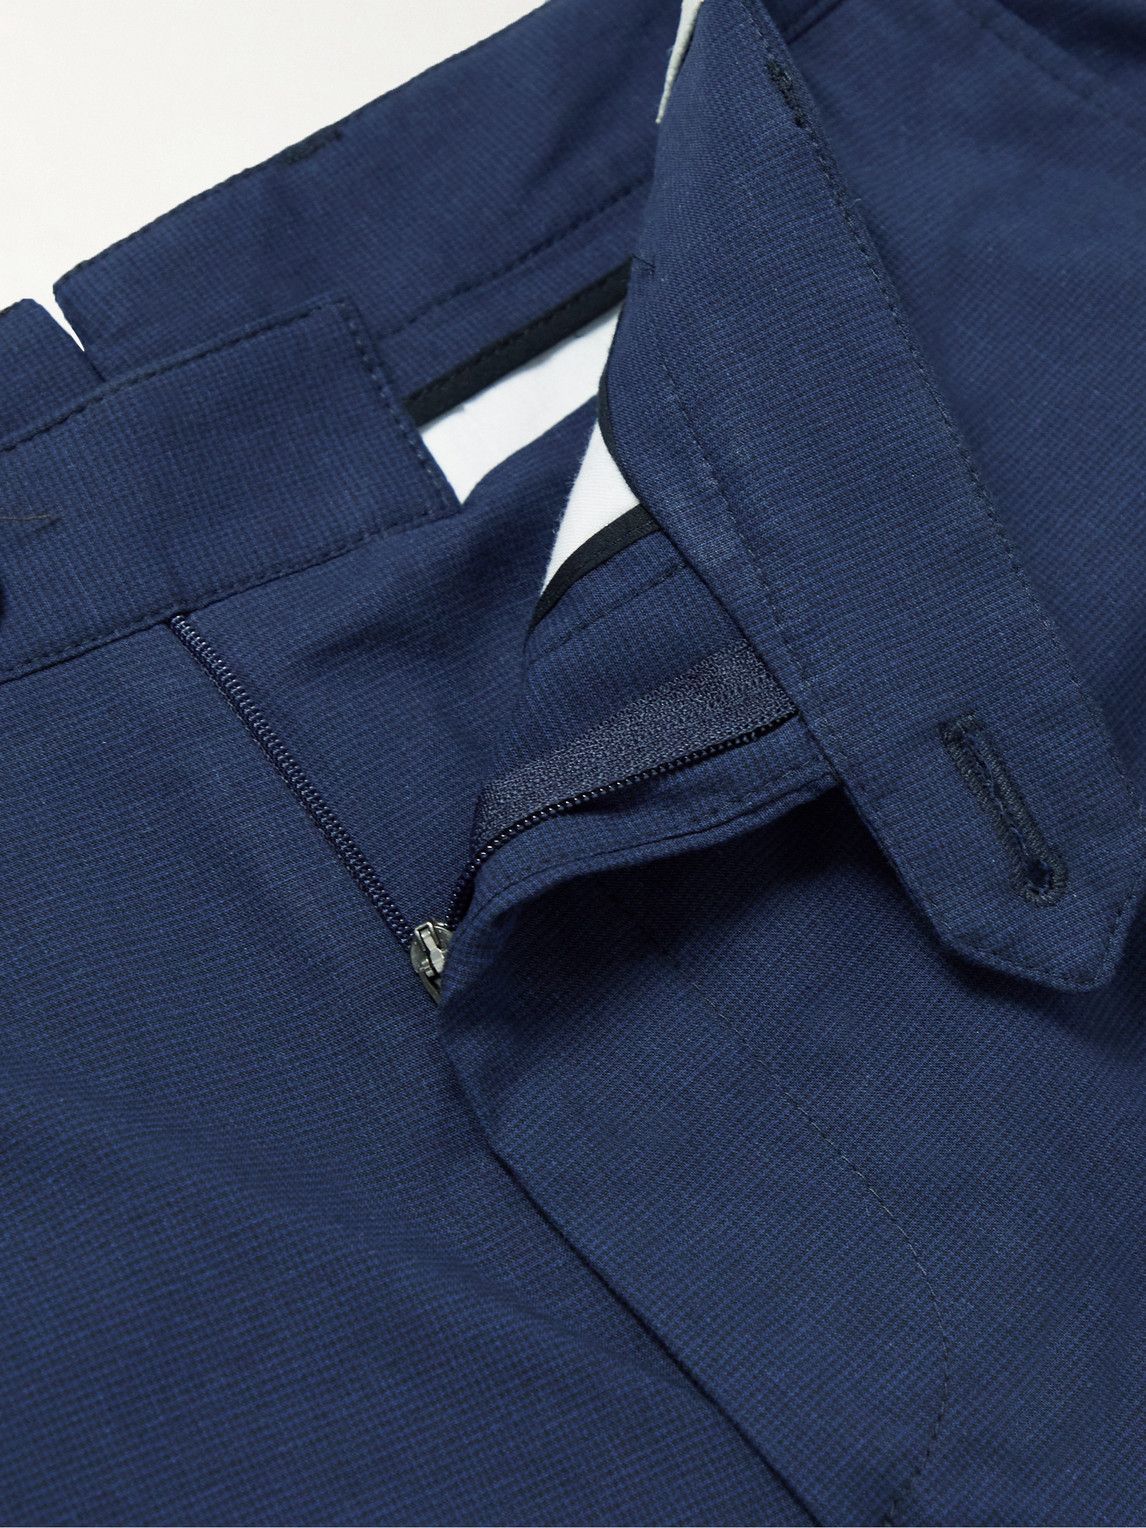 Oliver Spencer - Fishtail Straight-Leg Cotton-Blend Suit Trousers - Blue